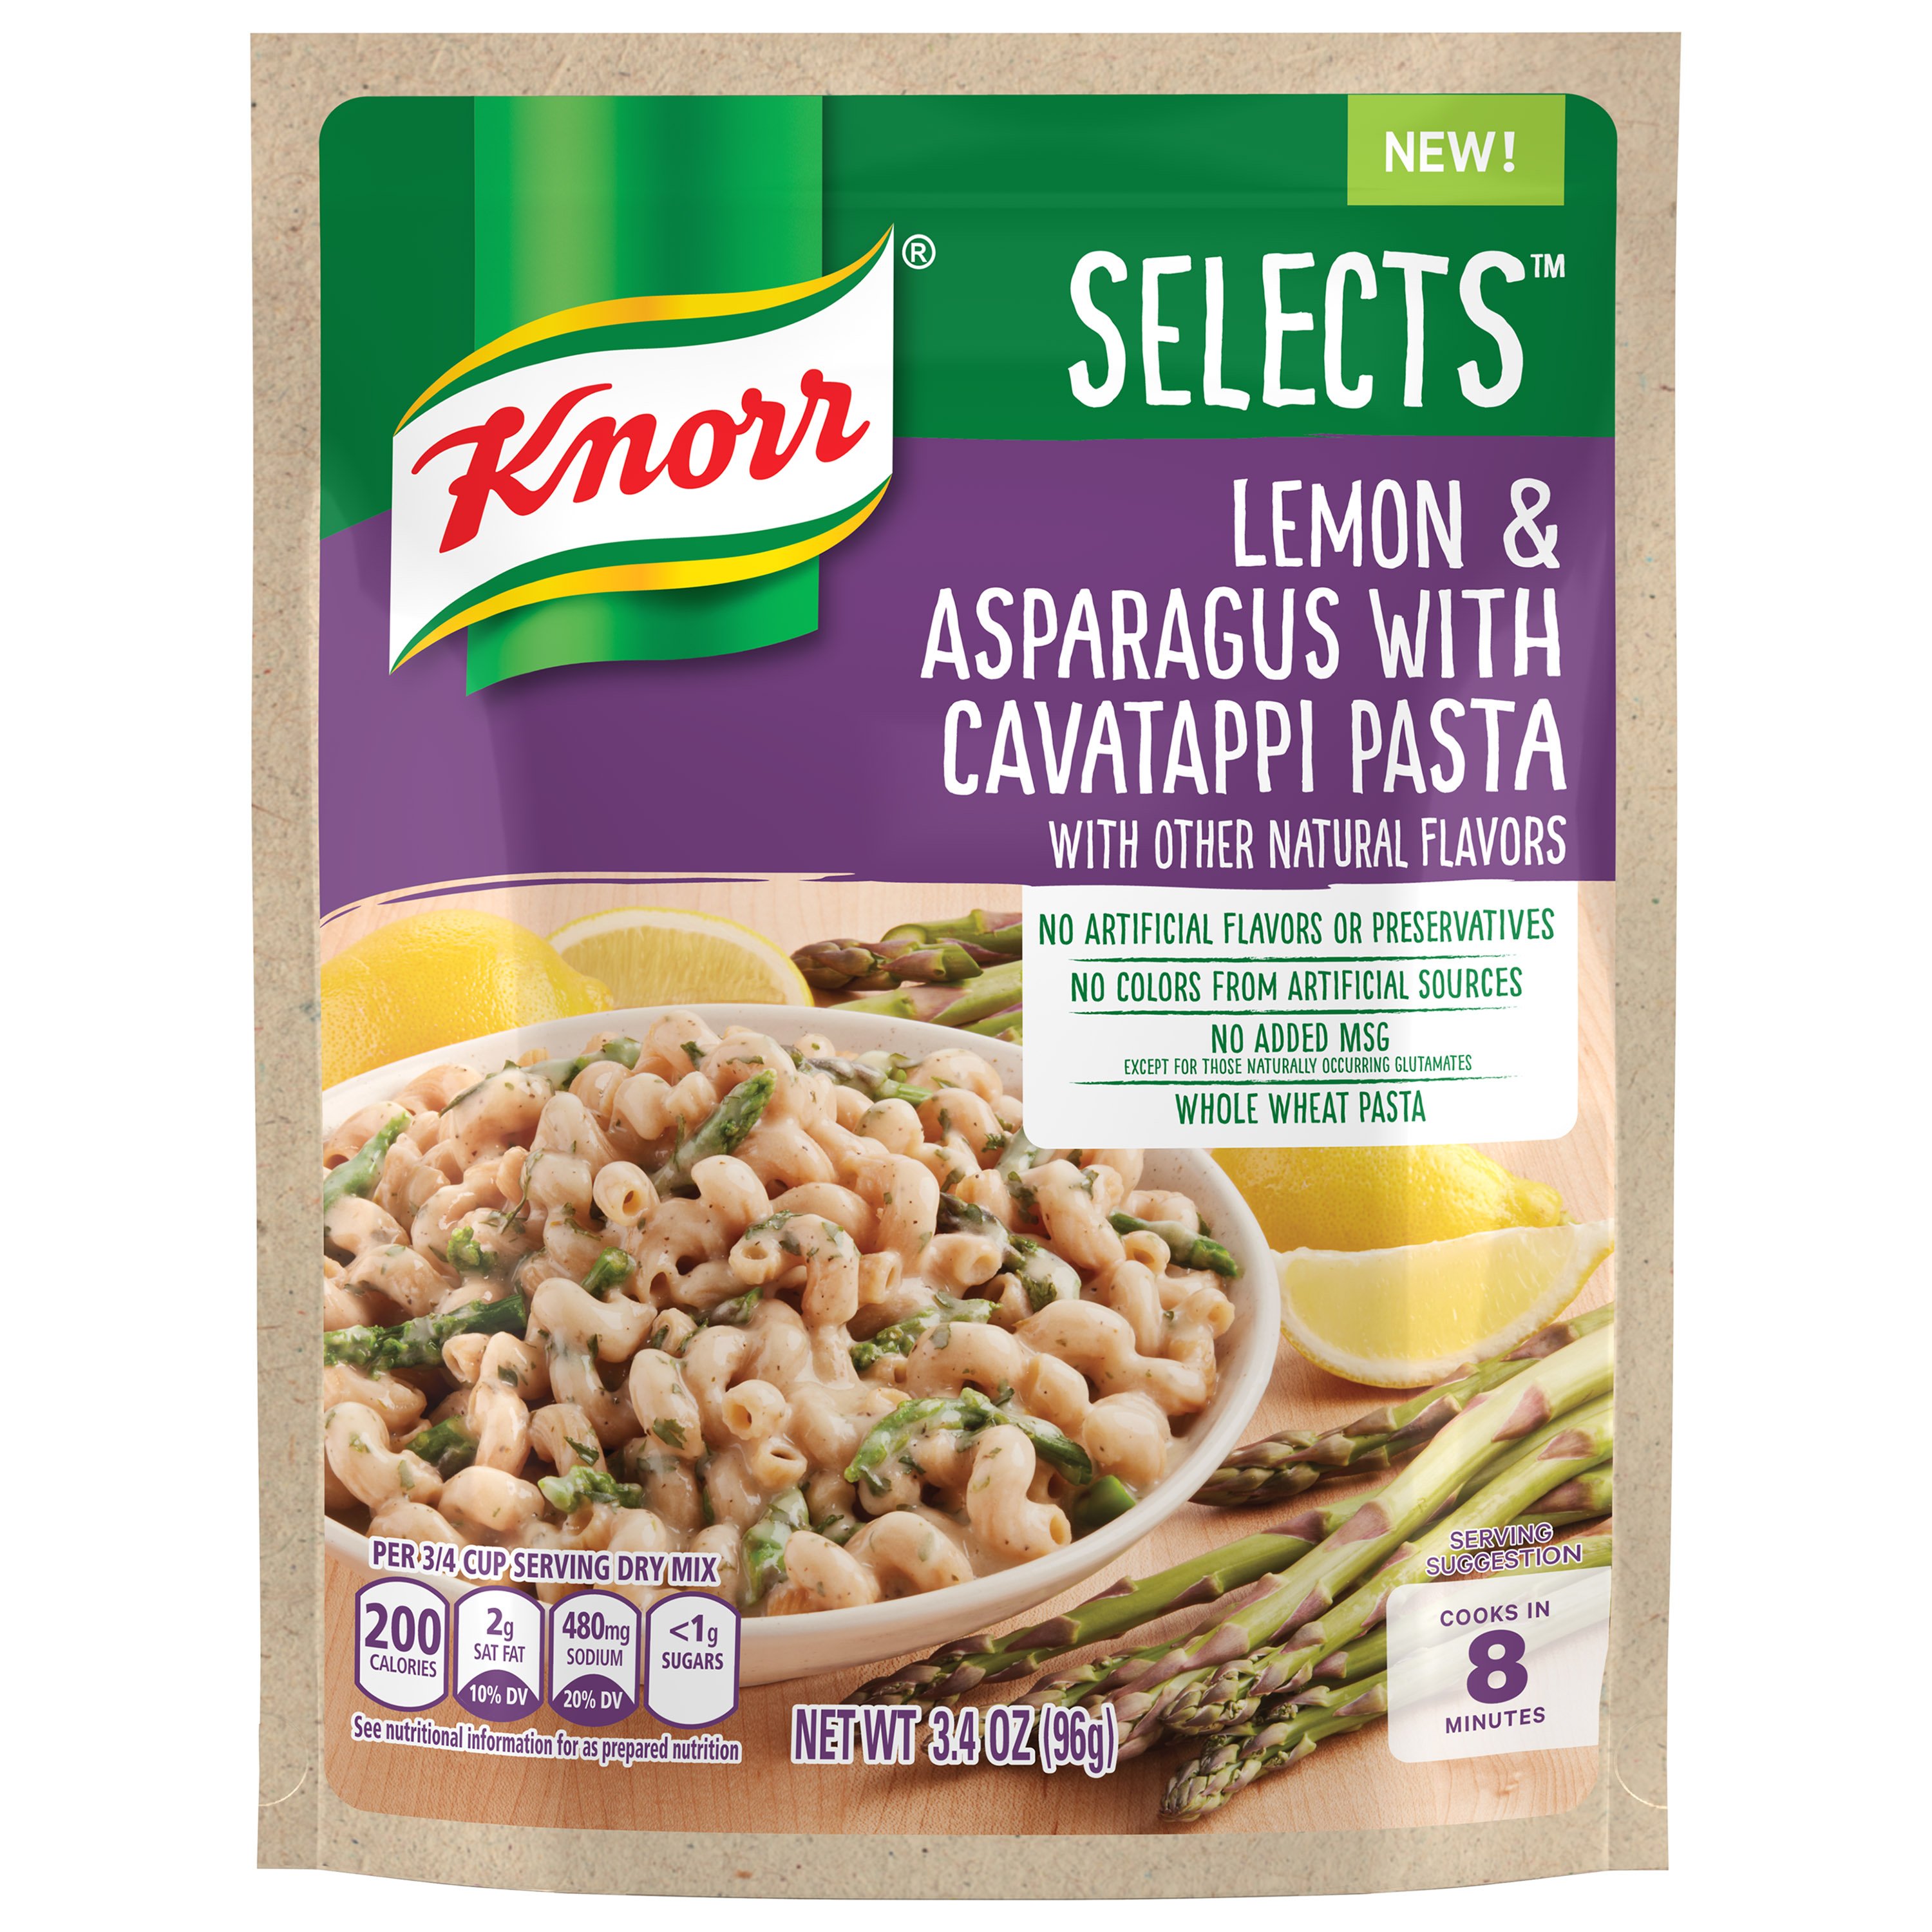 Download Knorr Selects Lemon Asparagus Whole Wheat Cavatappi Pasta - Shop Pantry Meals at H-E-B